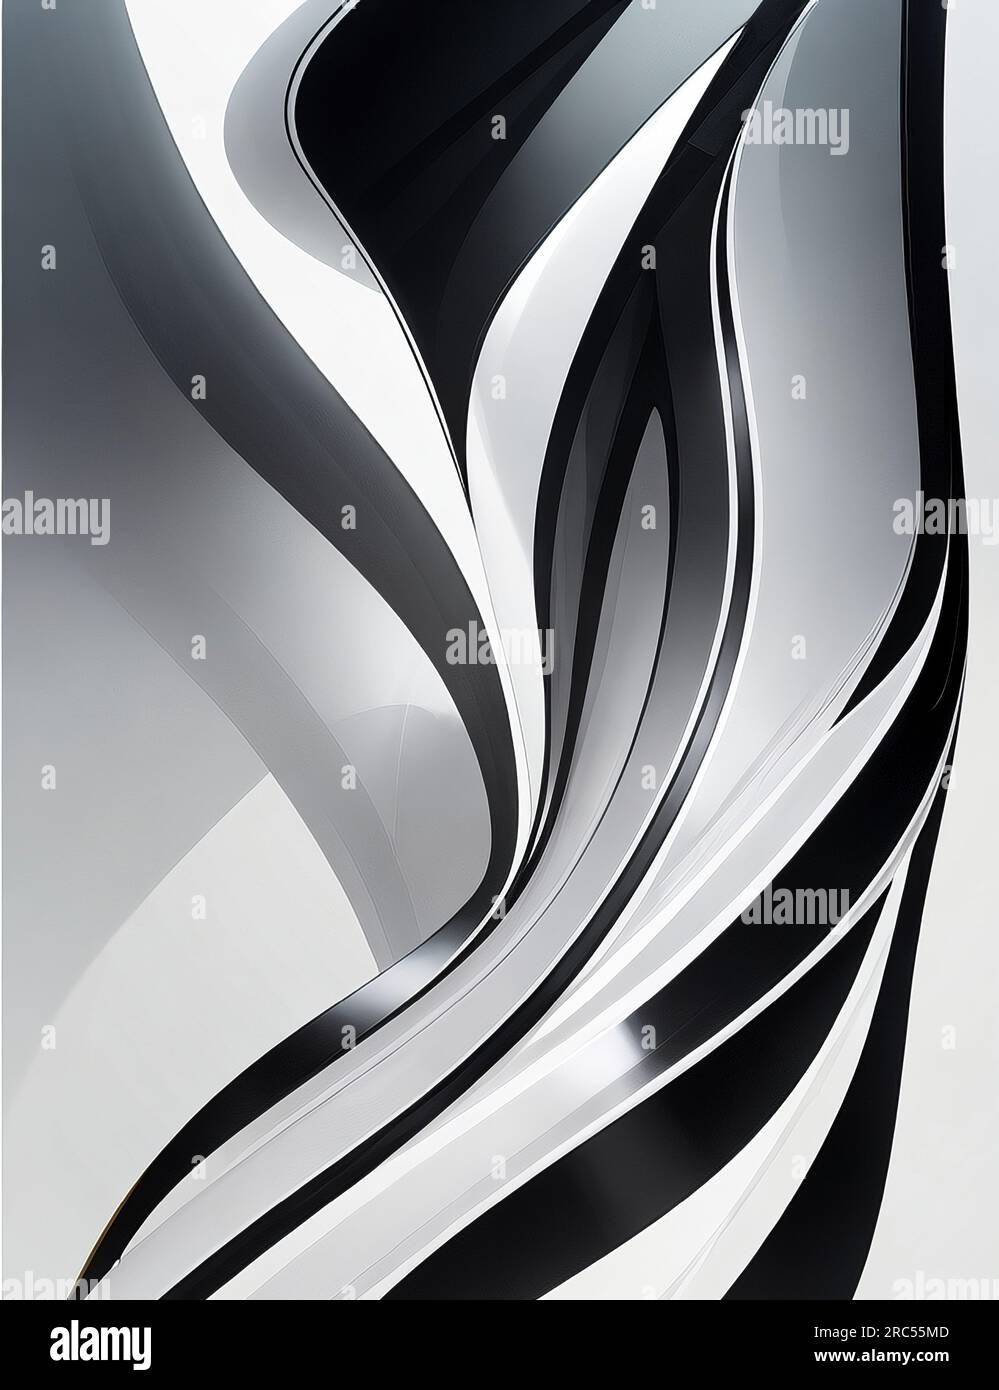 DreamShaper v5 shape of a silhouette formed of sleek sliced vi 0